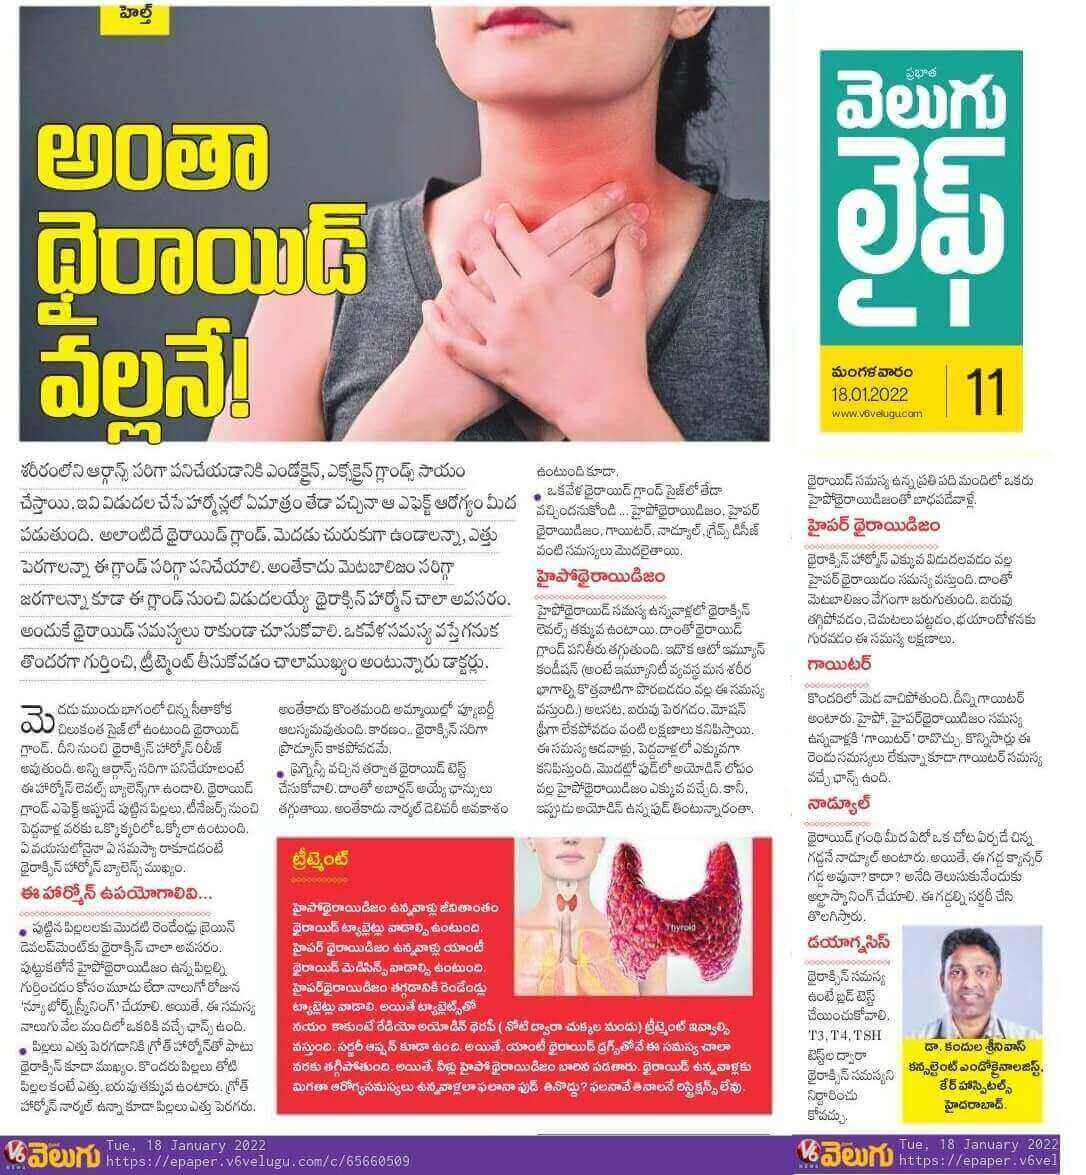 Article on Thyroid by  Dr. Srinivas Kandula - Consultant Endocrinologist